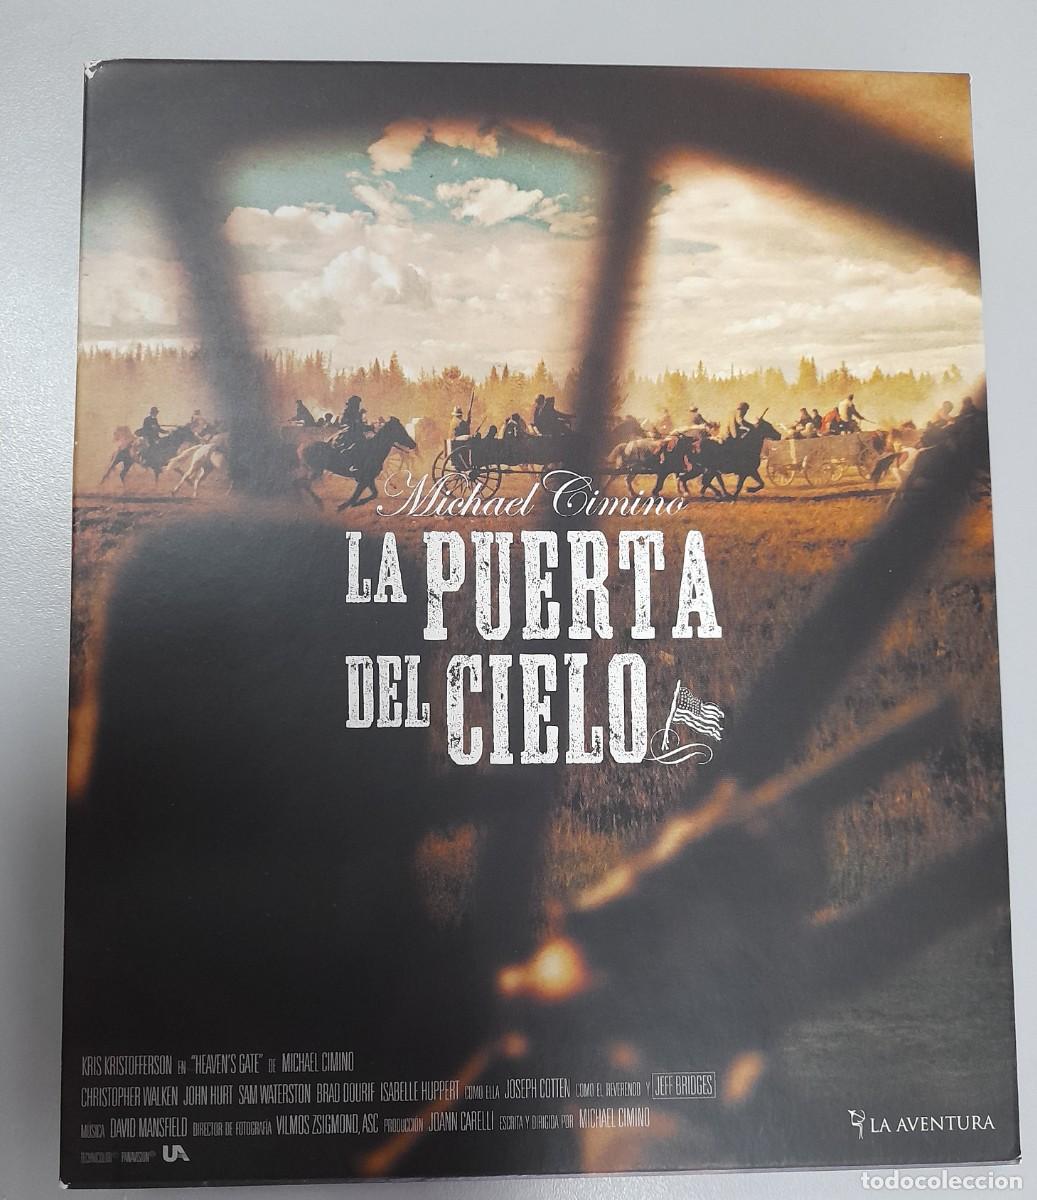 la puerta cielo - film de michael cimino, e - Acheter Films de cinéma Blu-Ray Disc dans - 383087724